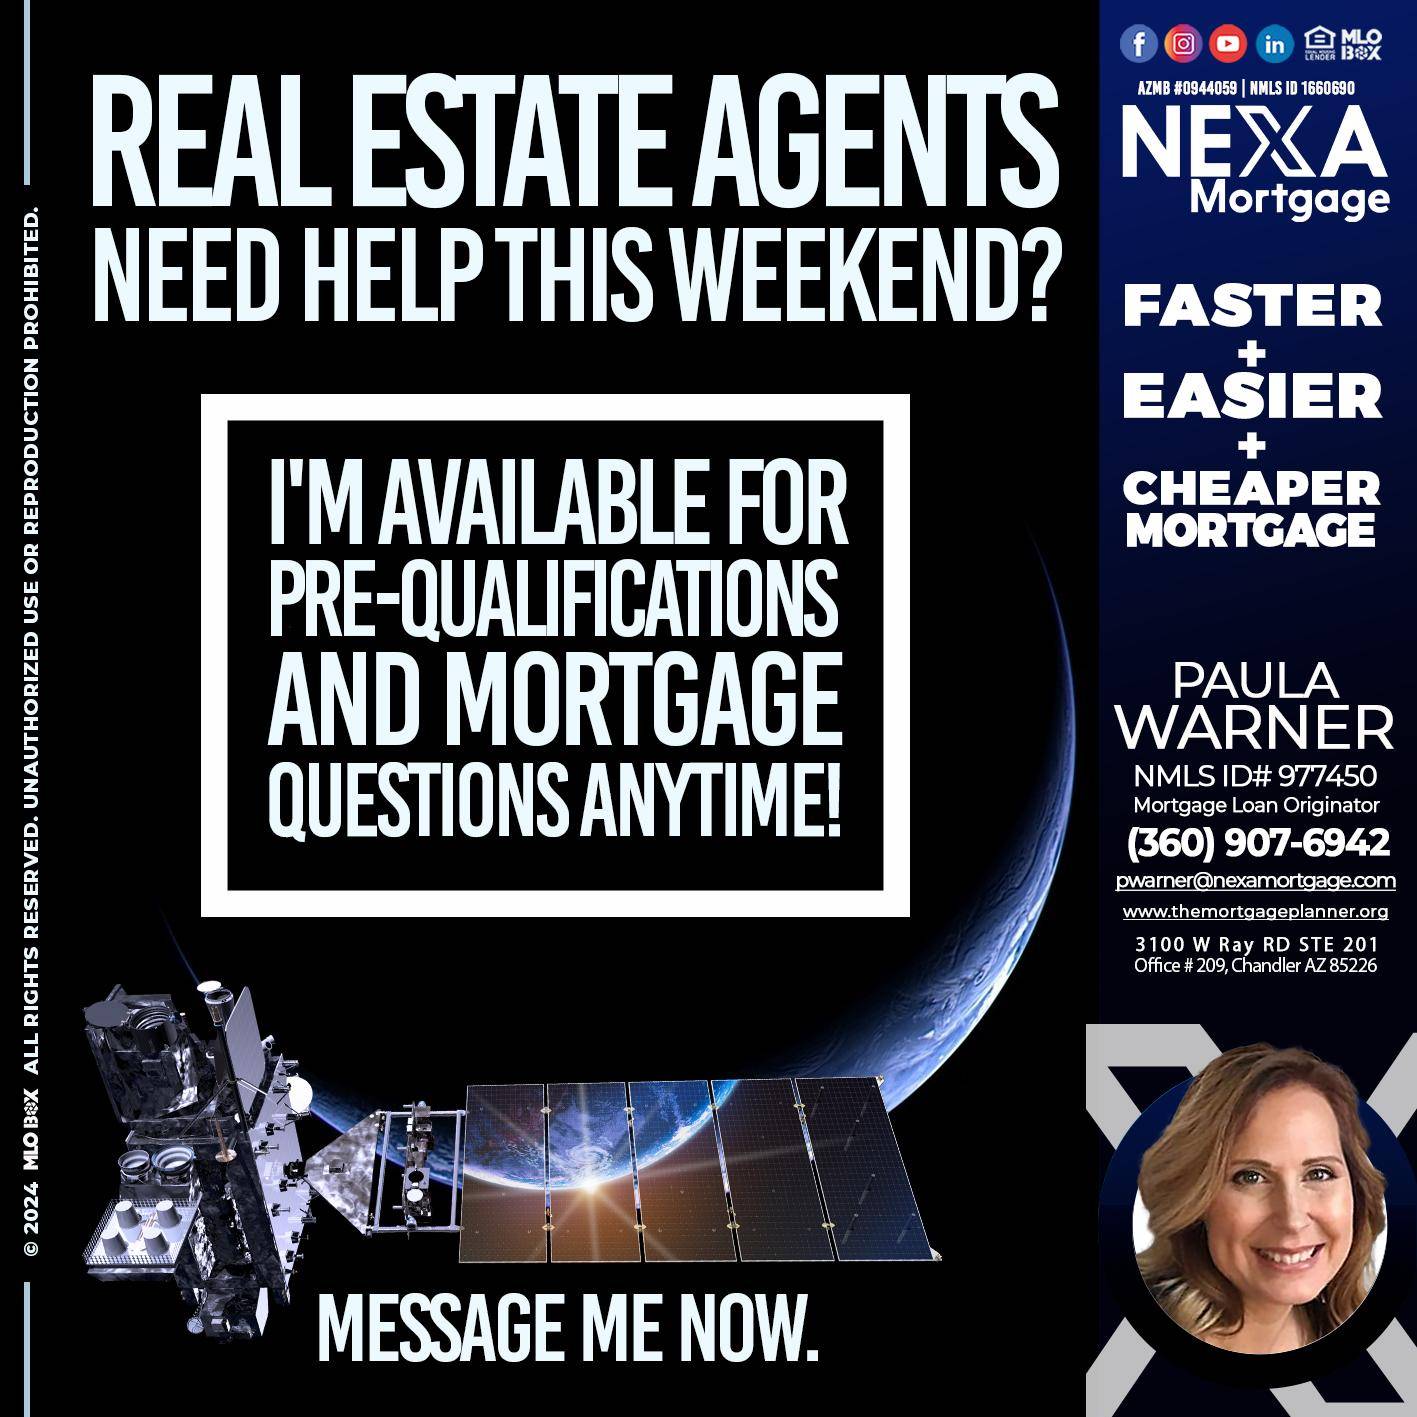 REAL ESTATE AGENTS - Paula Warner -Mortgage Loan Originator